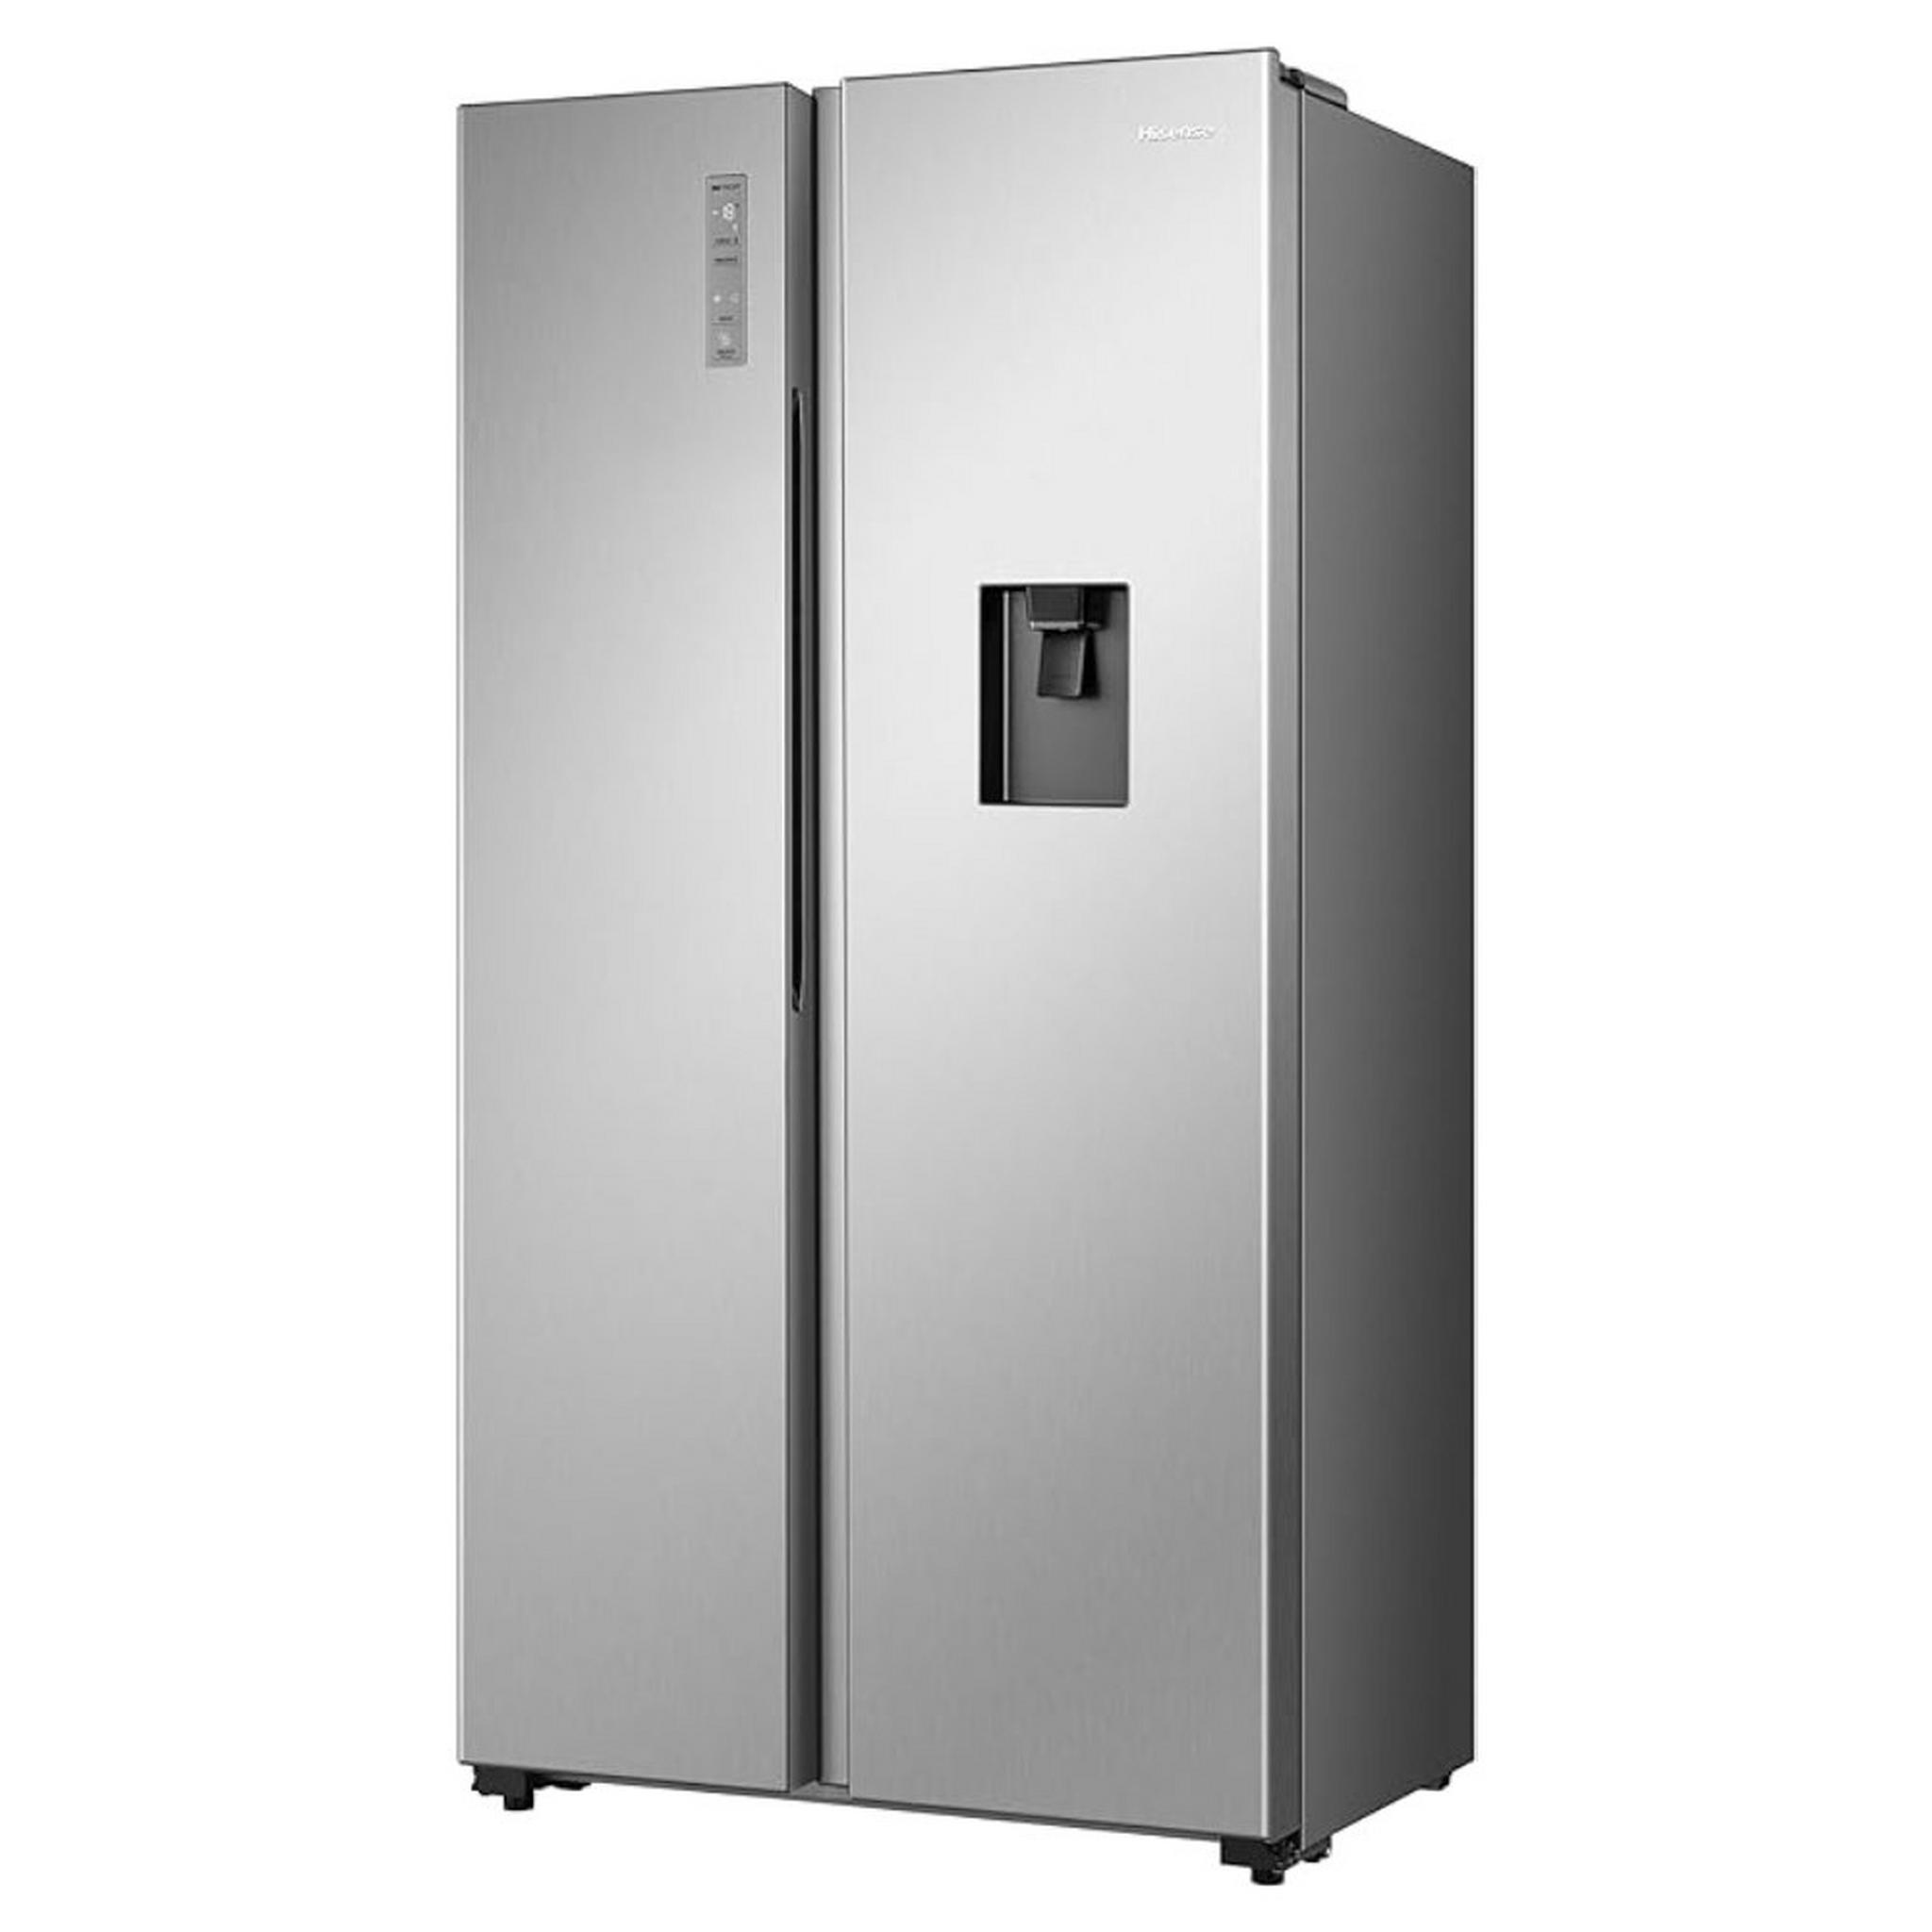 Hisense Side by Side Refrigerator, 24 CFT, 670 Liters, RS670N4WSU1 – Inox